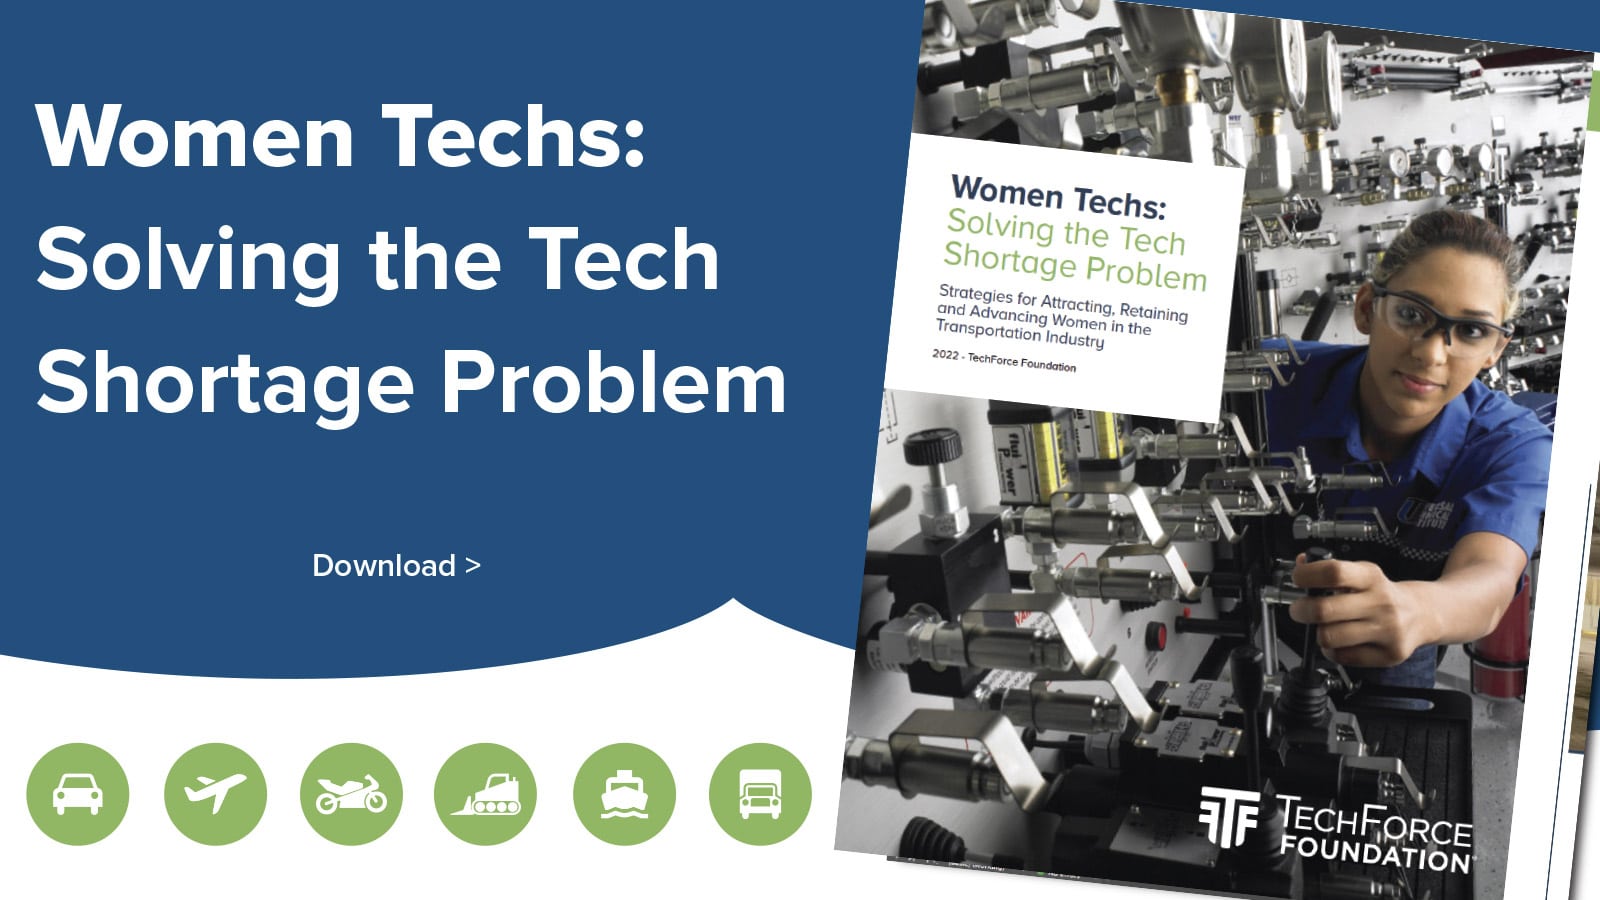 TechForce Foundation Women Techs whitepaper